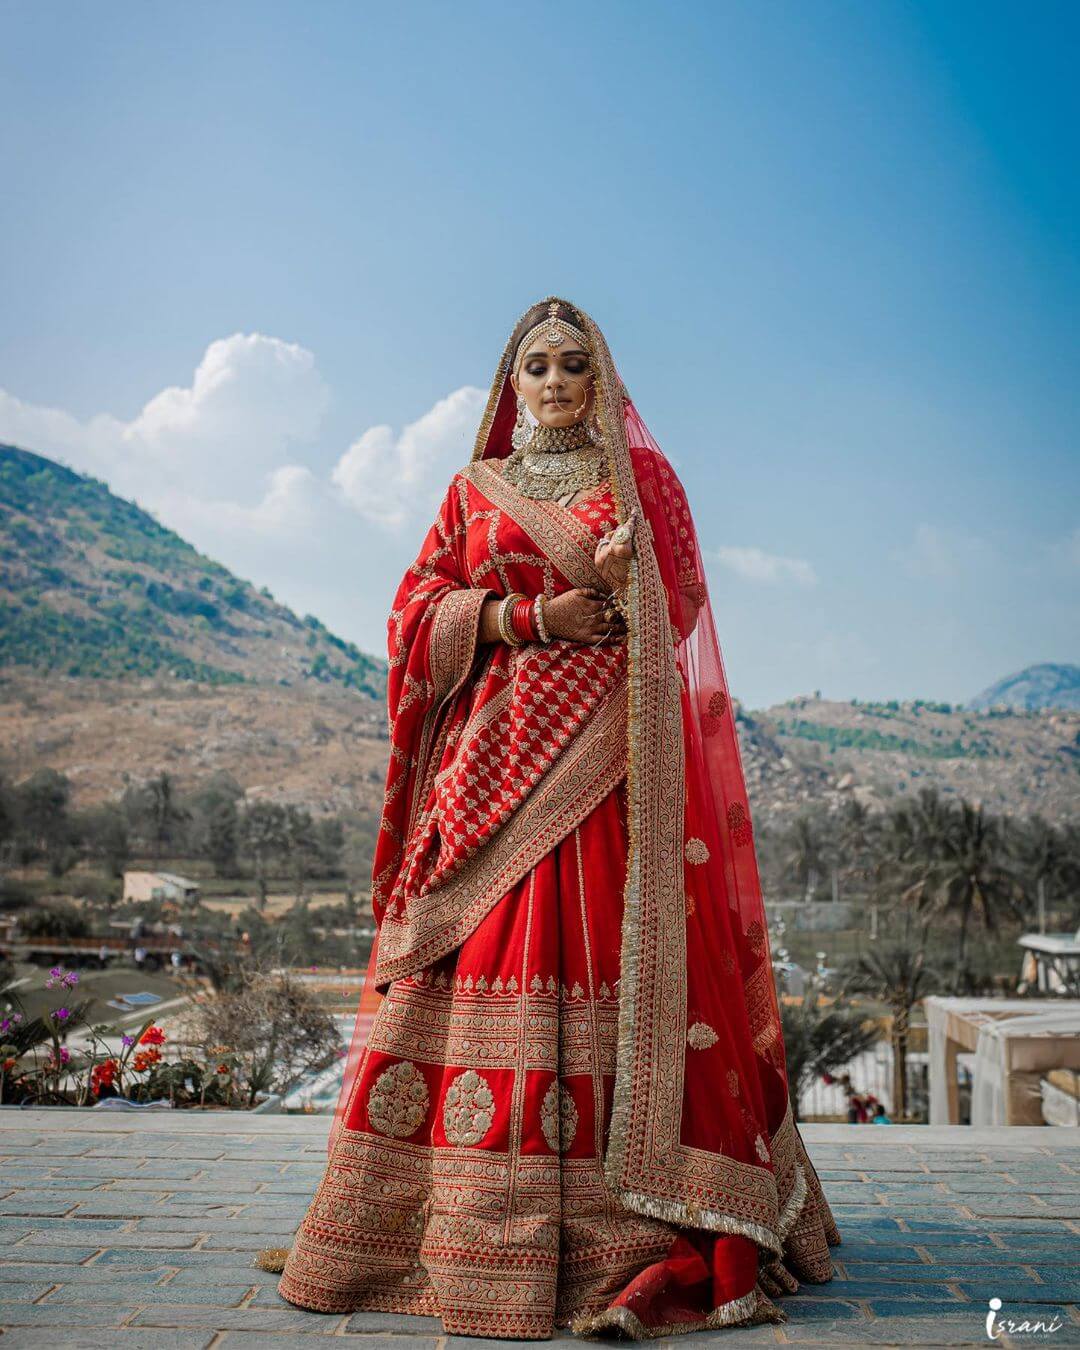 The Minimalistic Red Bridal lehenga Stunning Sabyasachi Lehengas Spotted On Real Brides